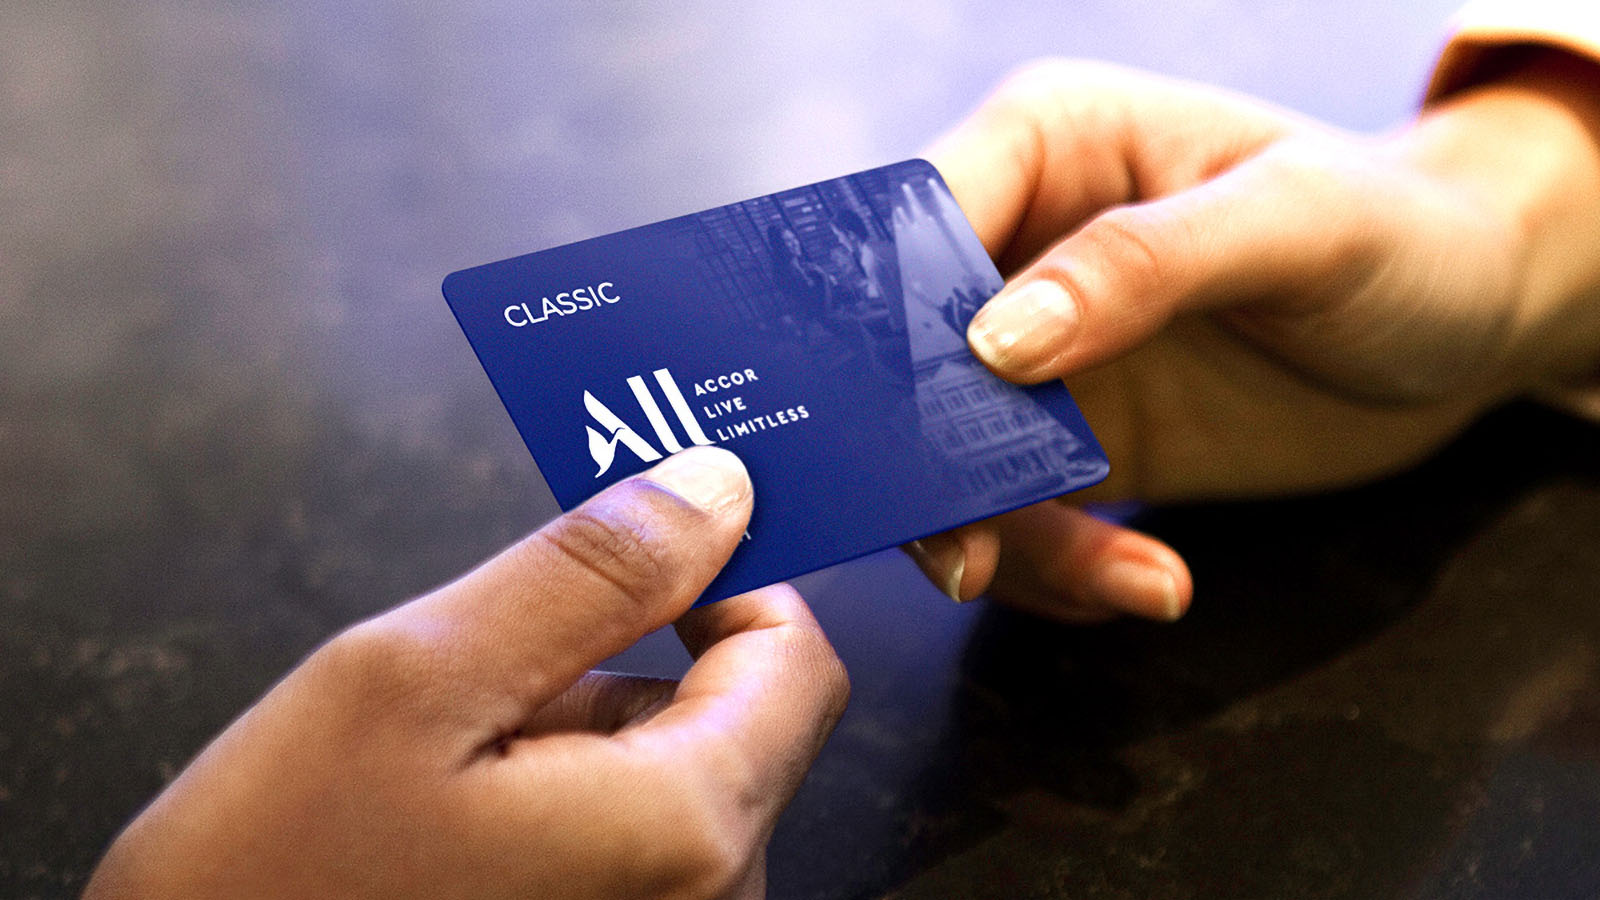 Accor Live Limitless Classic membership card